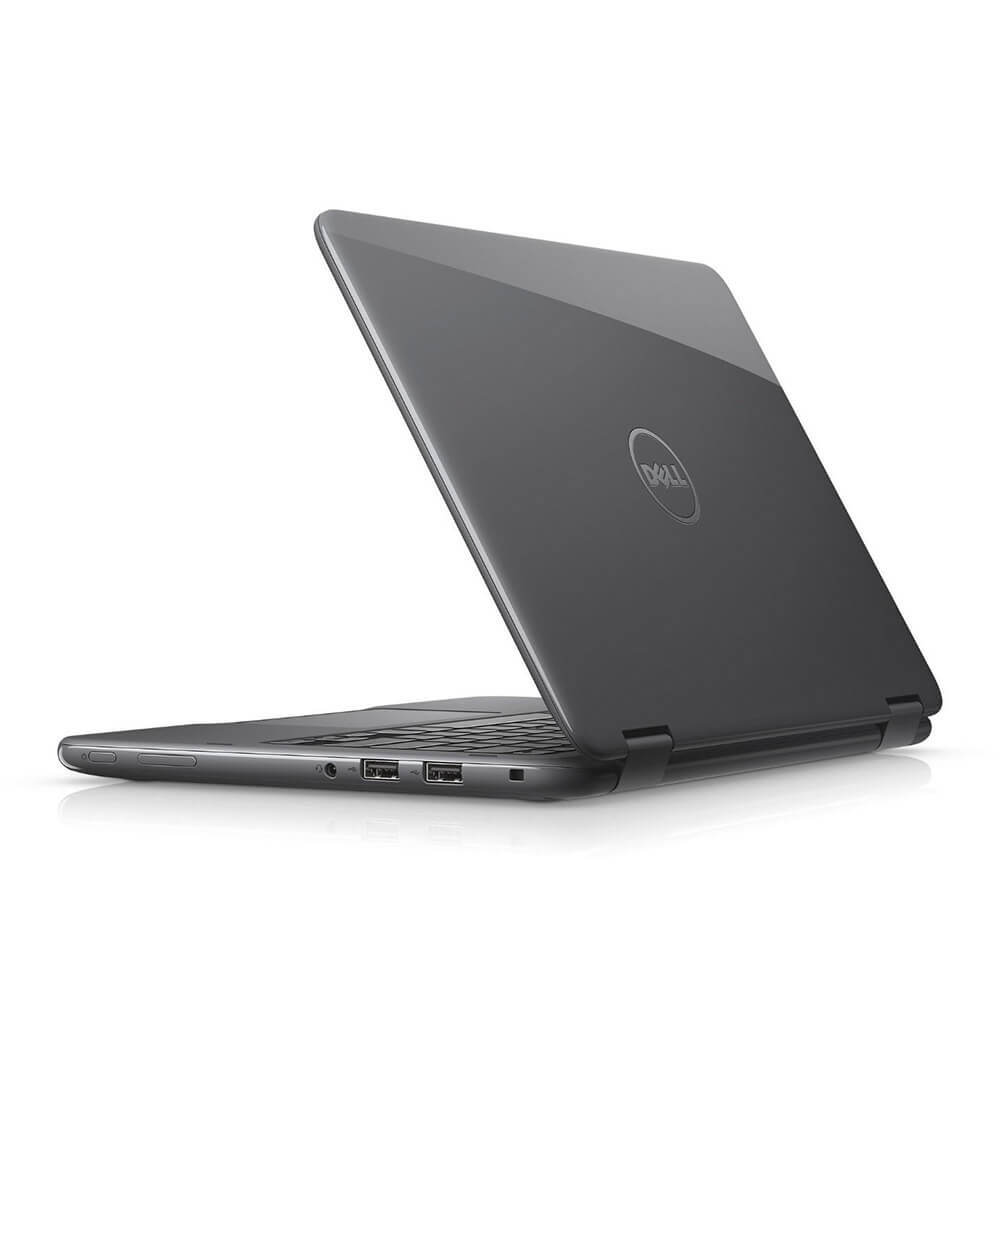 Laptop Dell Inspiron 3179 - Intel Core M3-7Y30, RAM 4GB, HDD 500GB, Intel HD Graphics, 11.6 inch